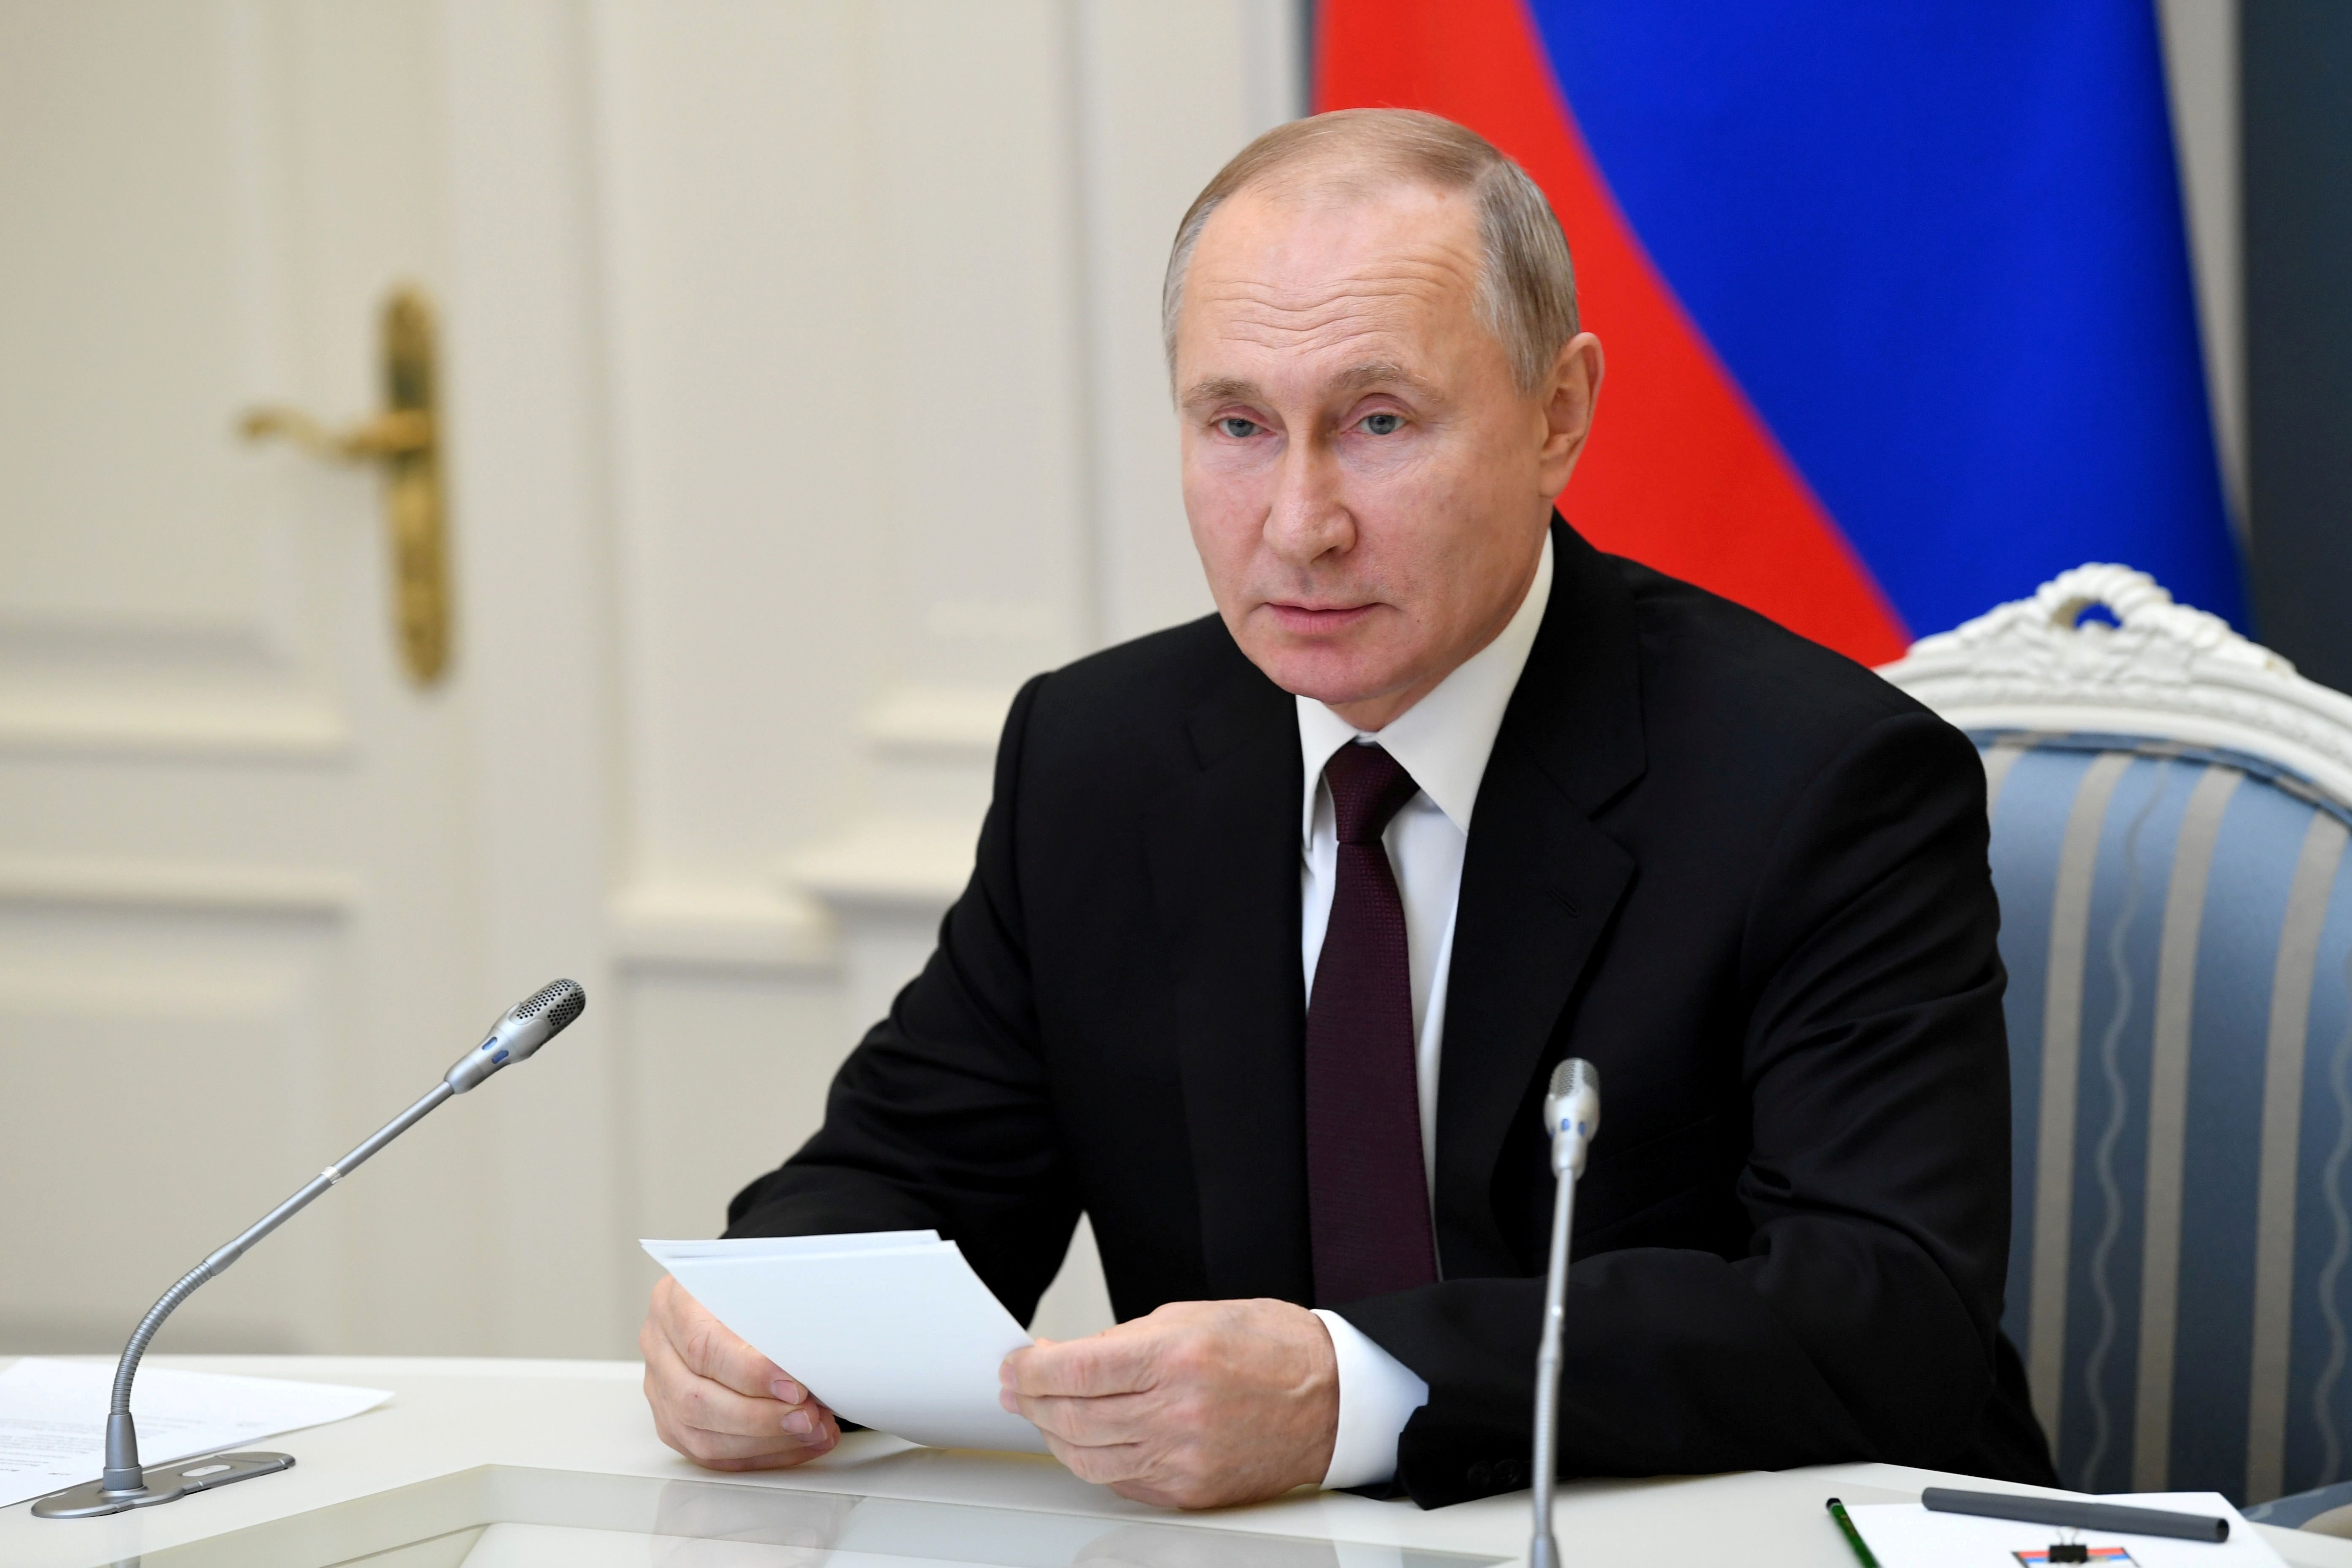 El presidente ruso Vladimir Putin apostó a Sputnik para aumentar su influencia geopolítica (Sputnik/Alexei Nikolsky/Kremlin via REUTERS)